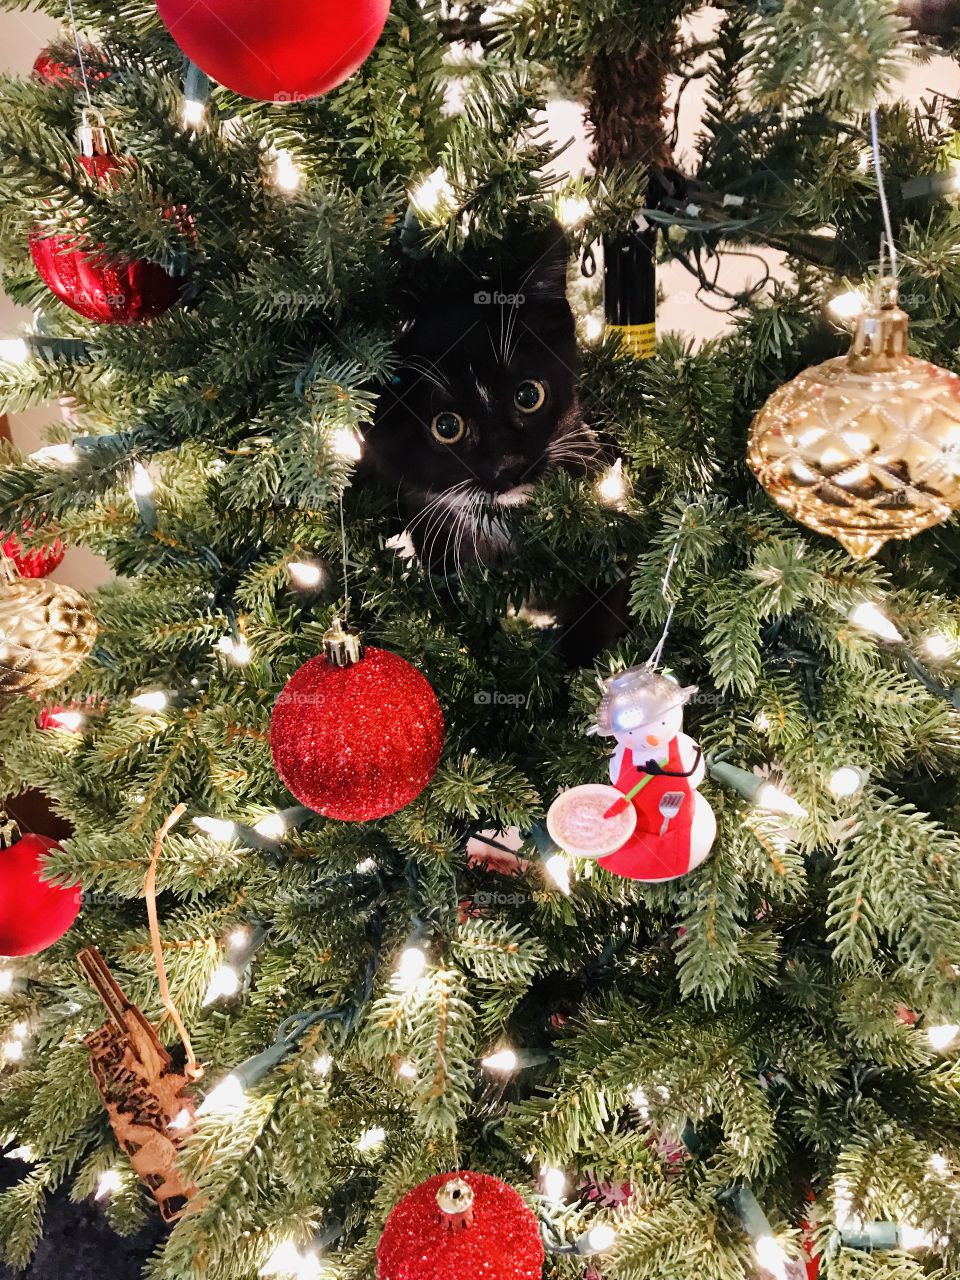 Cute kitten “ornament”